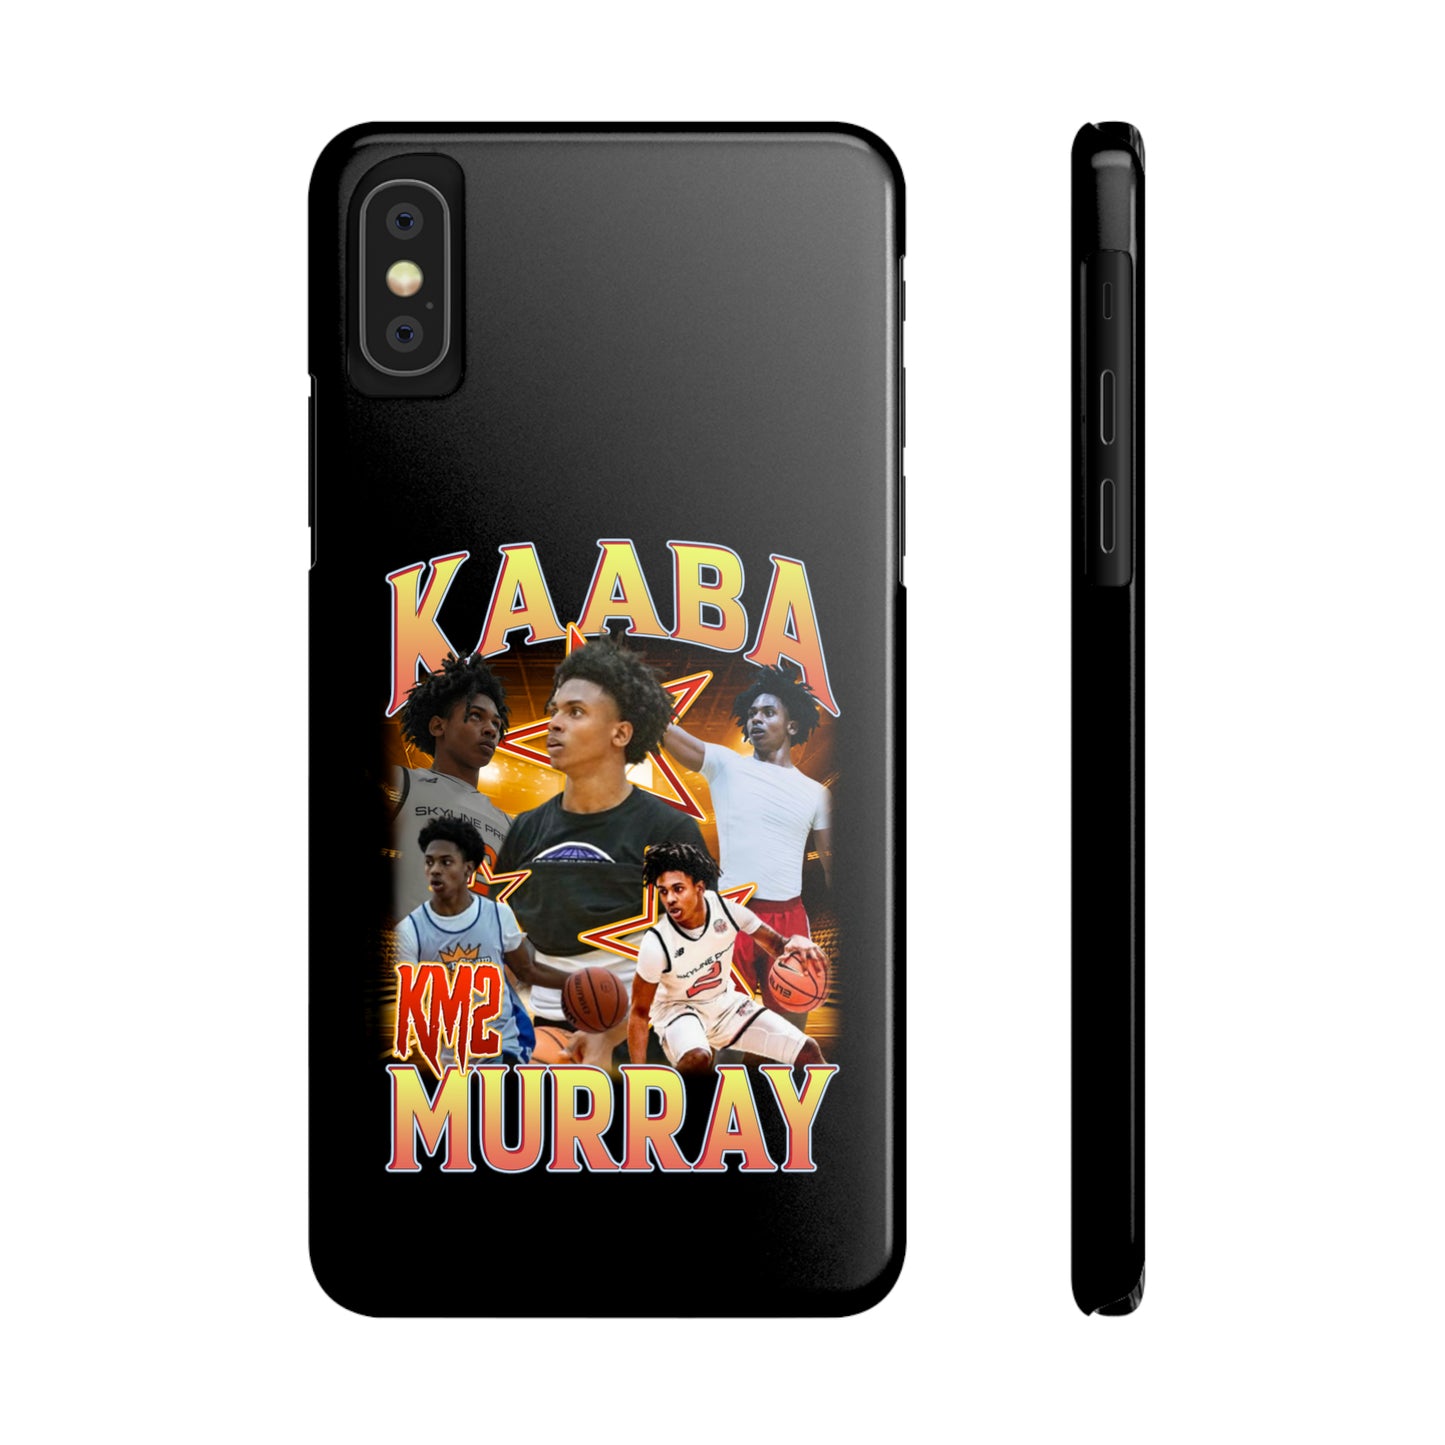 Kaaba Murray Phone Case